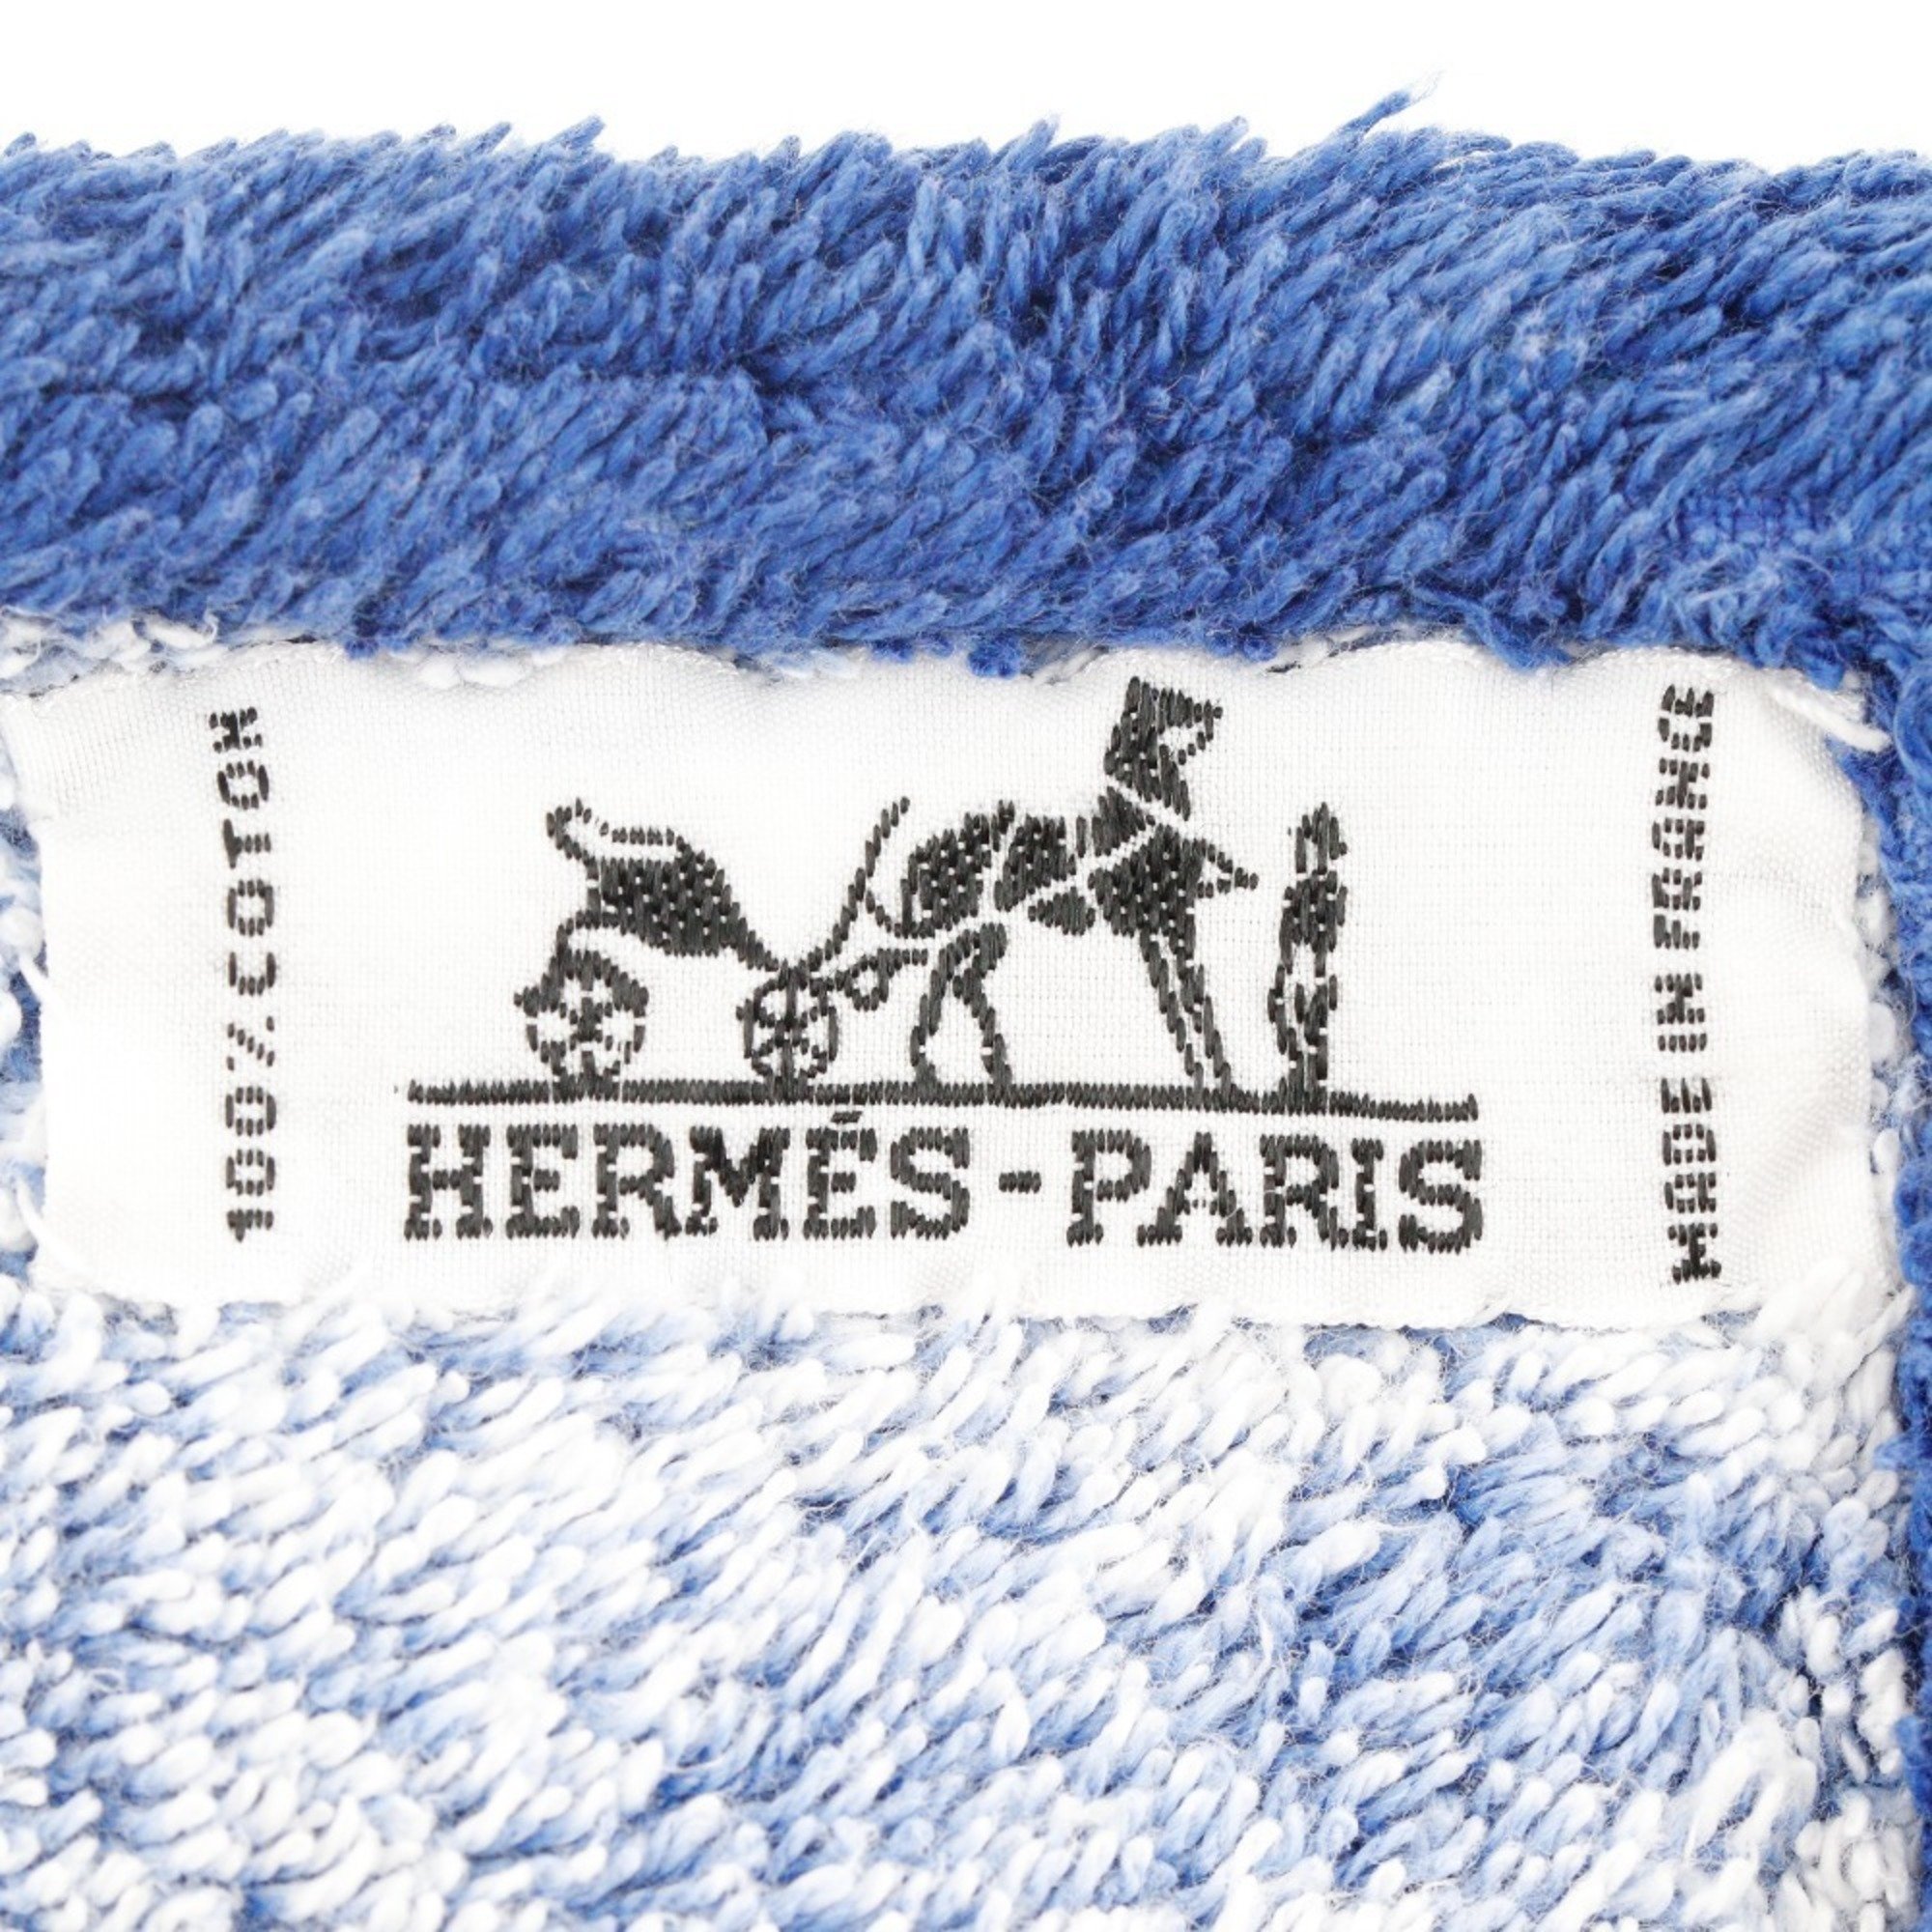 Hermes HERMES Beach Towel Set Miscellaneous Bird Panda Blanket Cotton White/Blue of 2 Towels Unisex